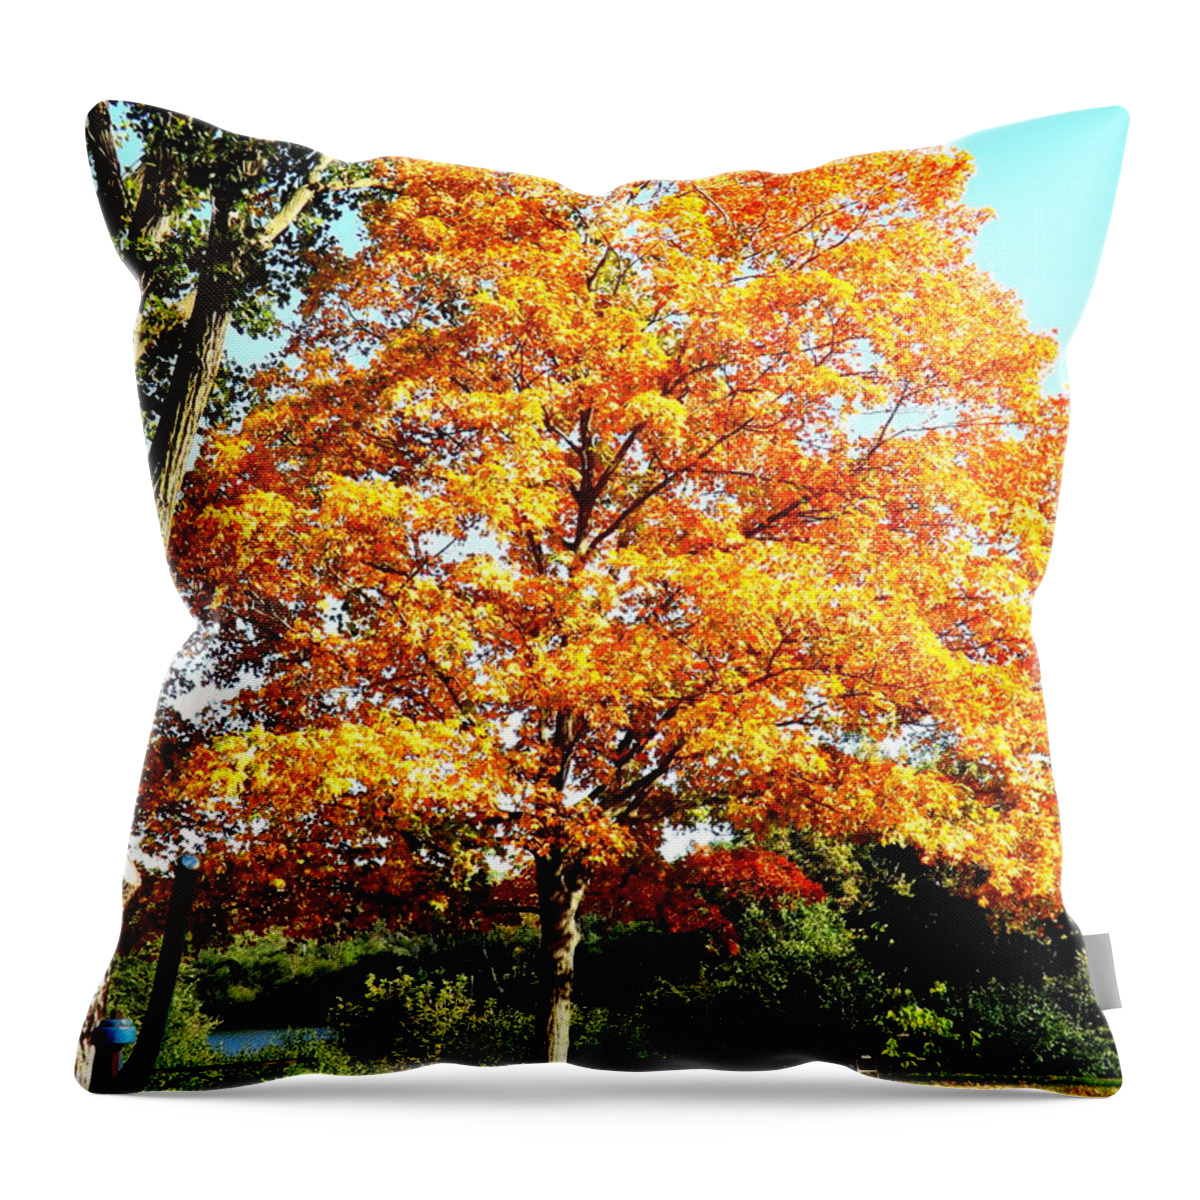 Autumn Glory Throw Pillow featuring the photograph Autumn Glory by Darren Robinson